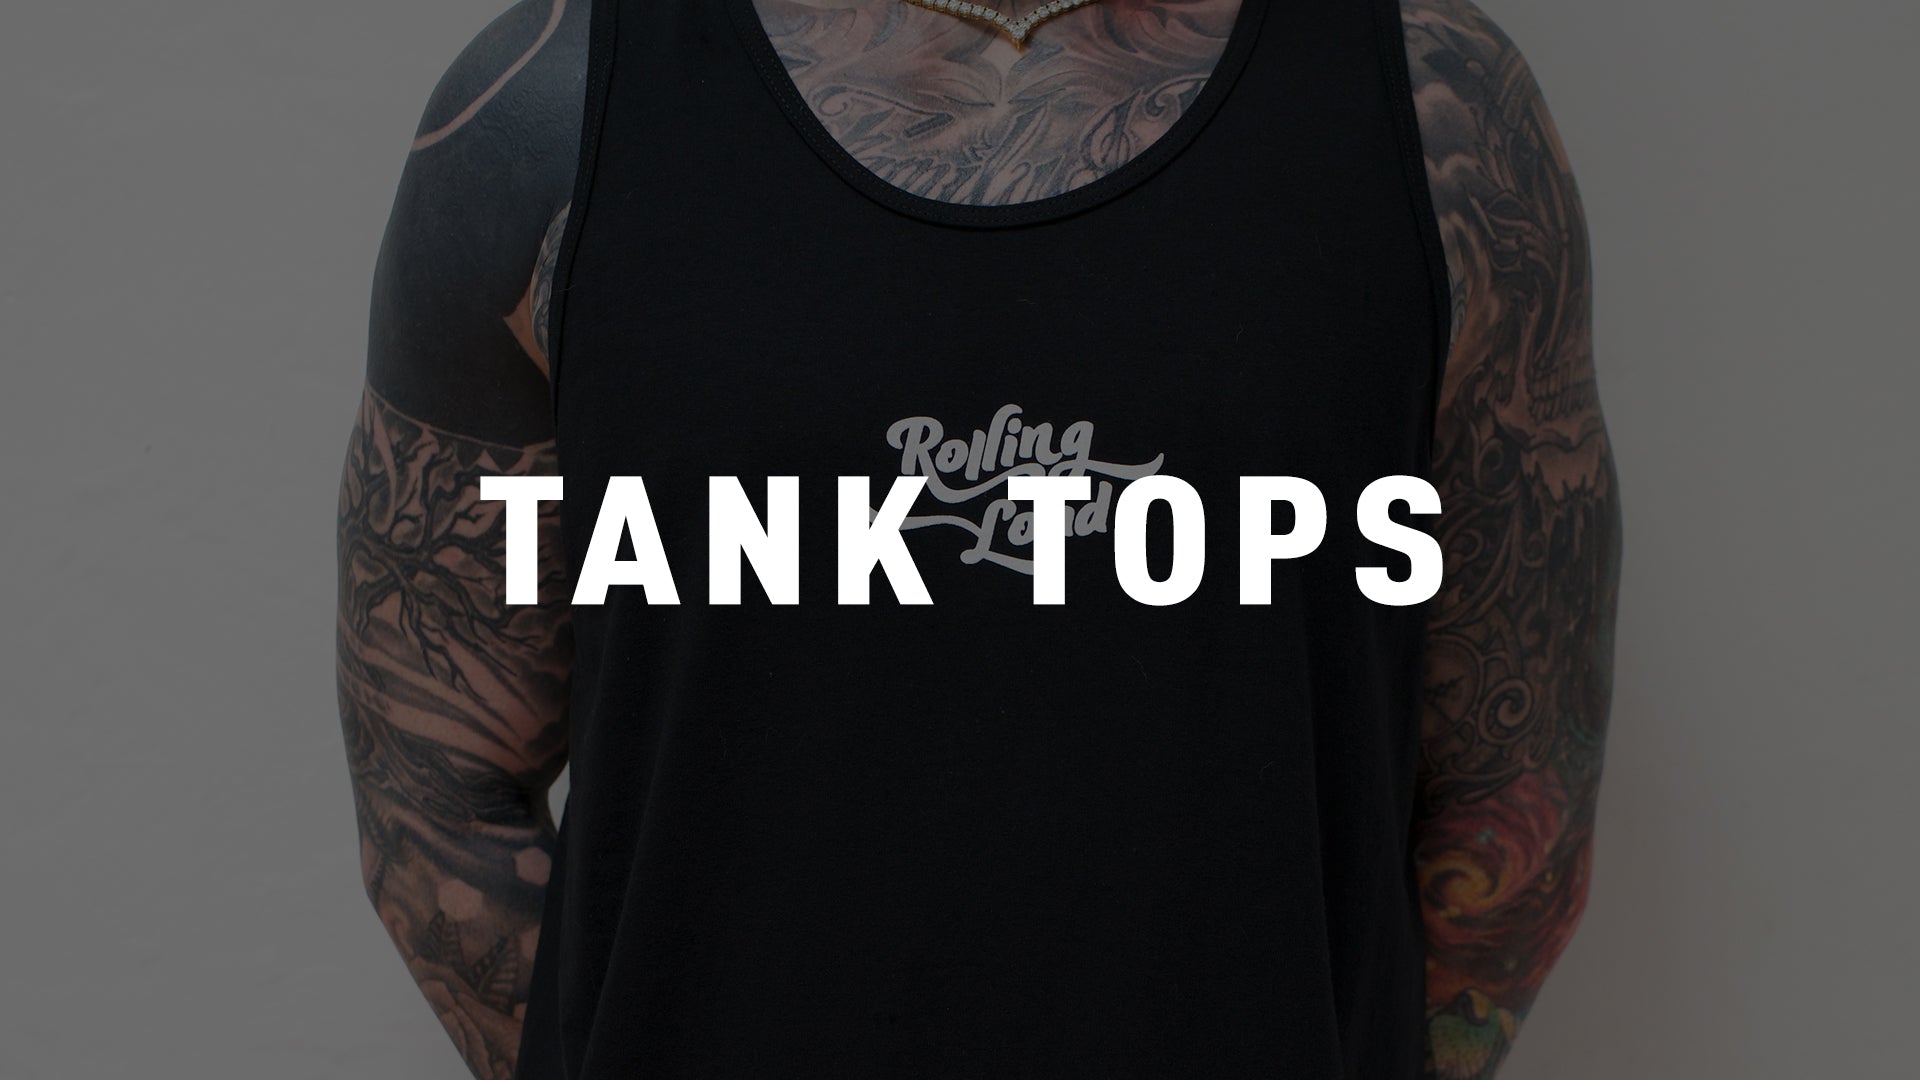 Tank Tops